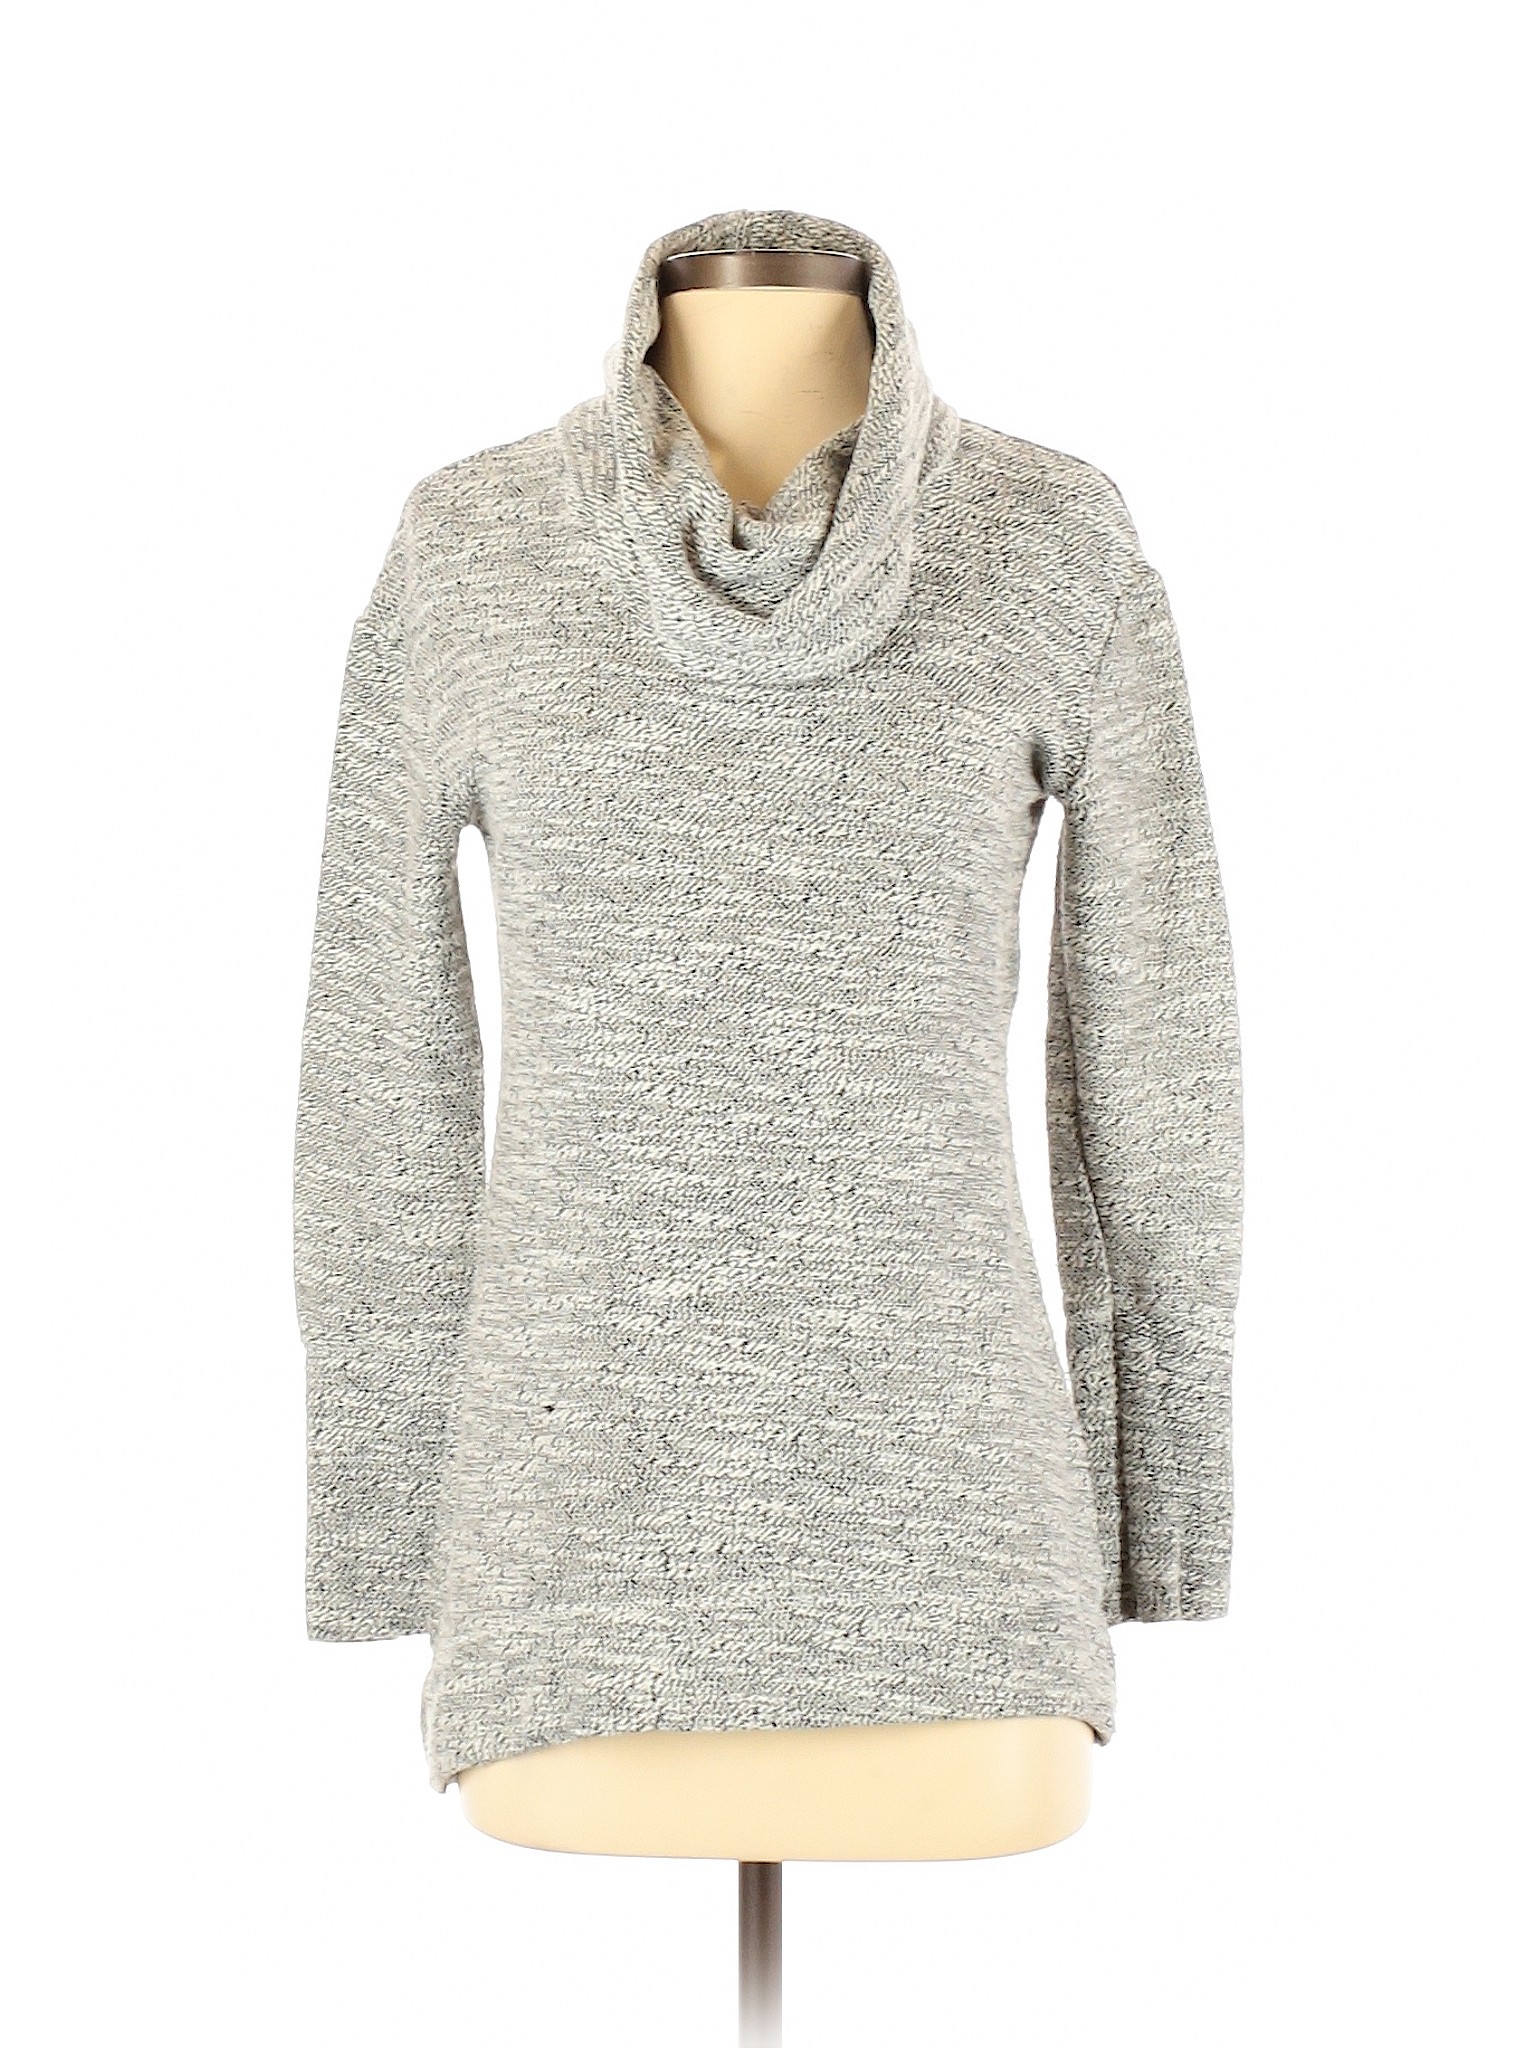 Merona Women Gray Pullover Sweater XS | eBay